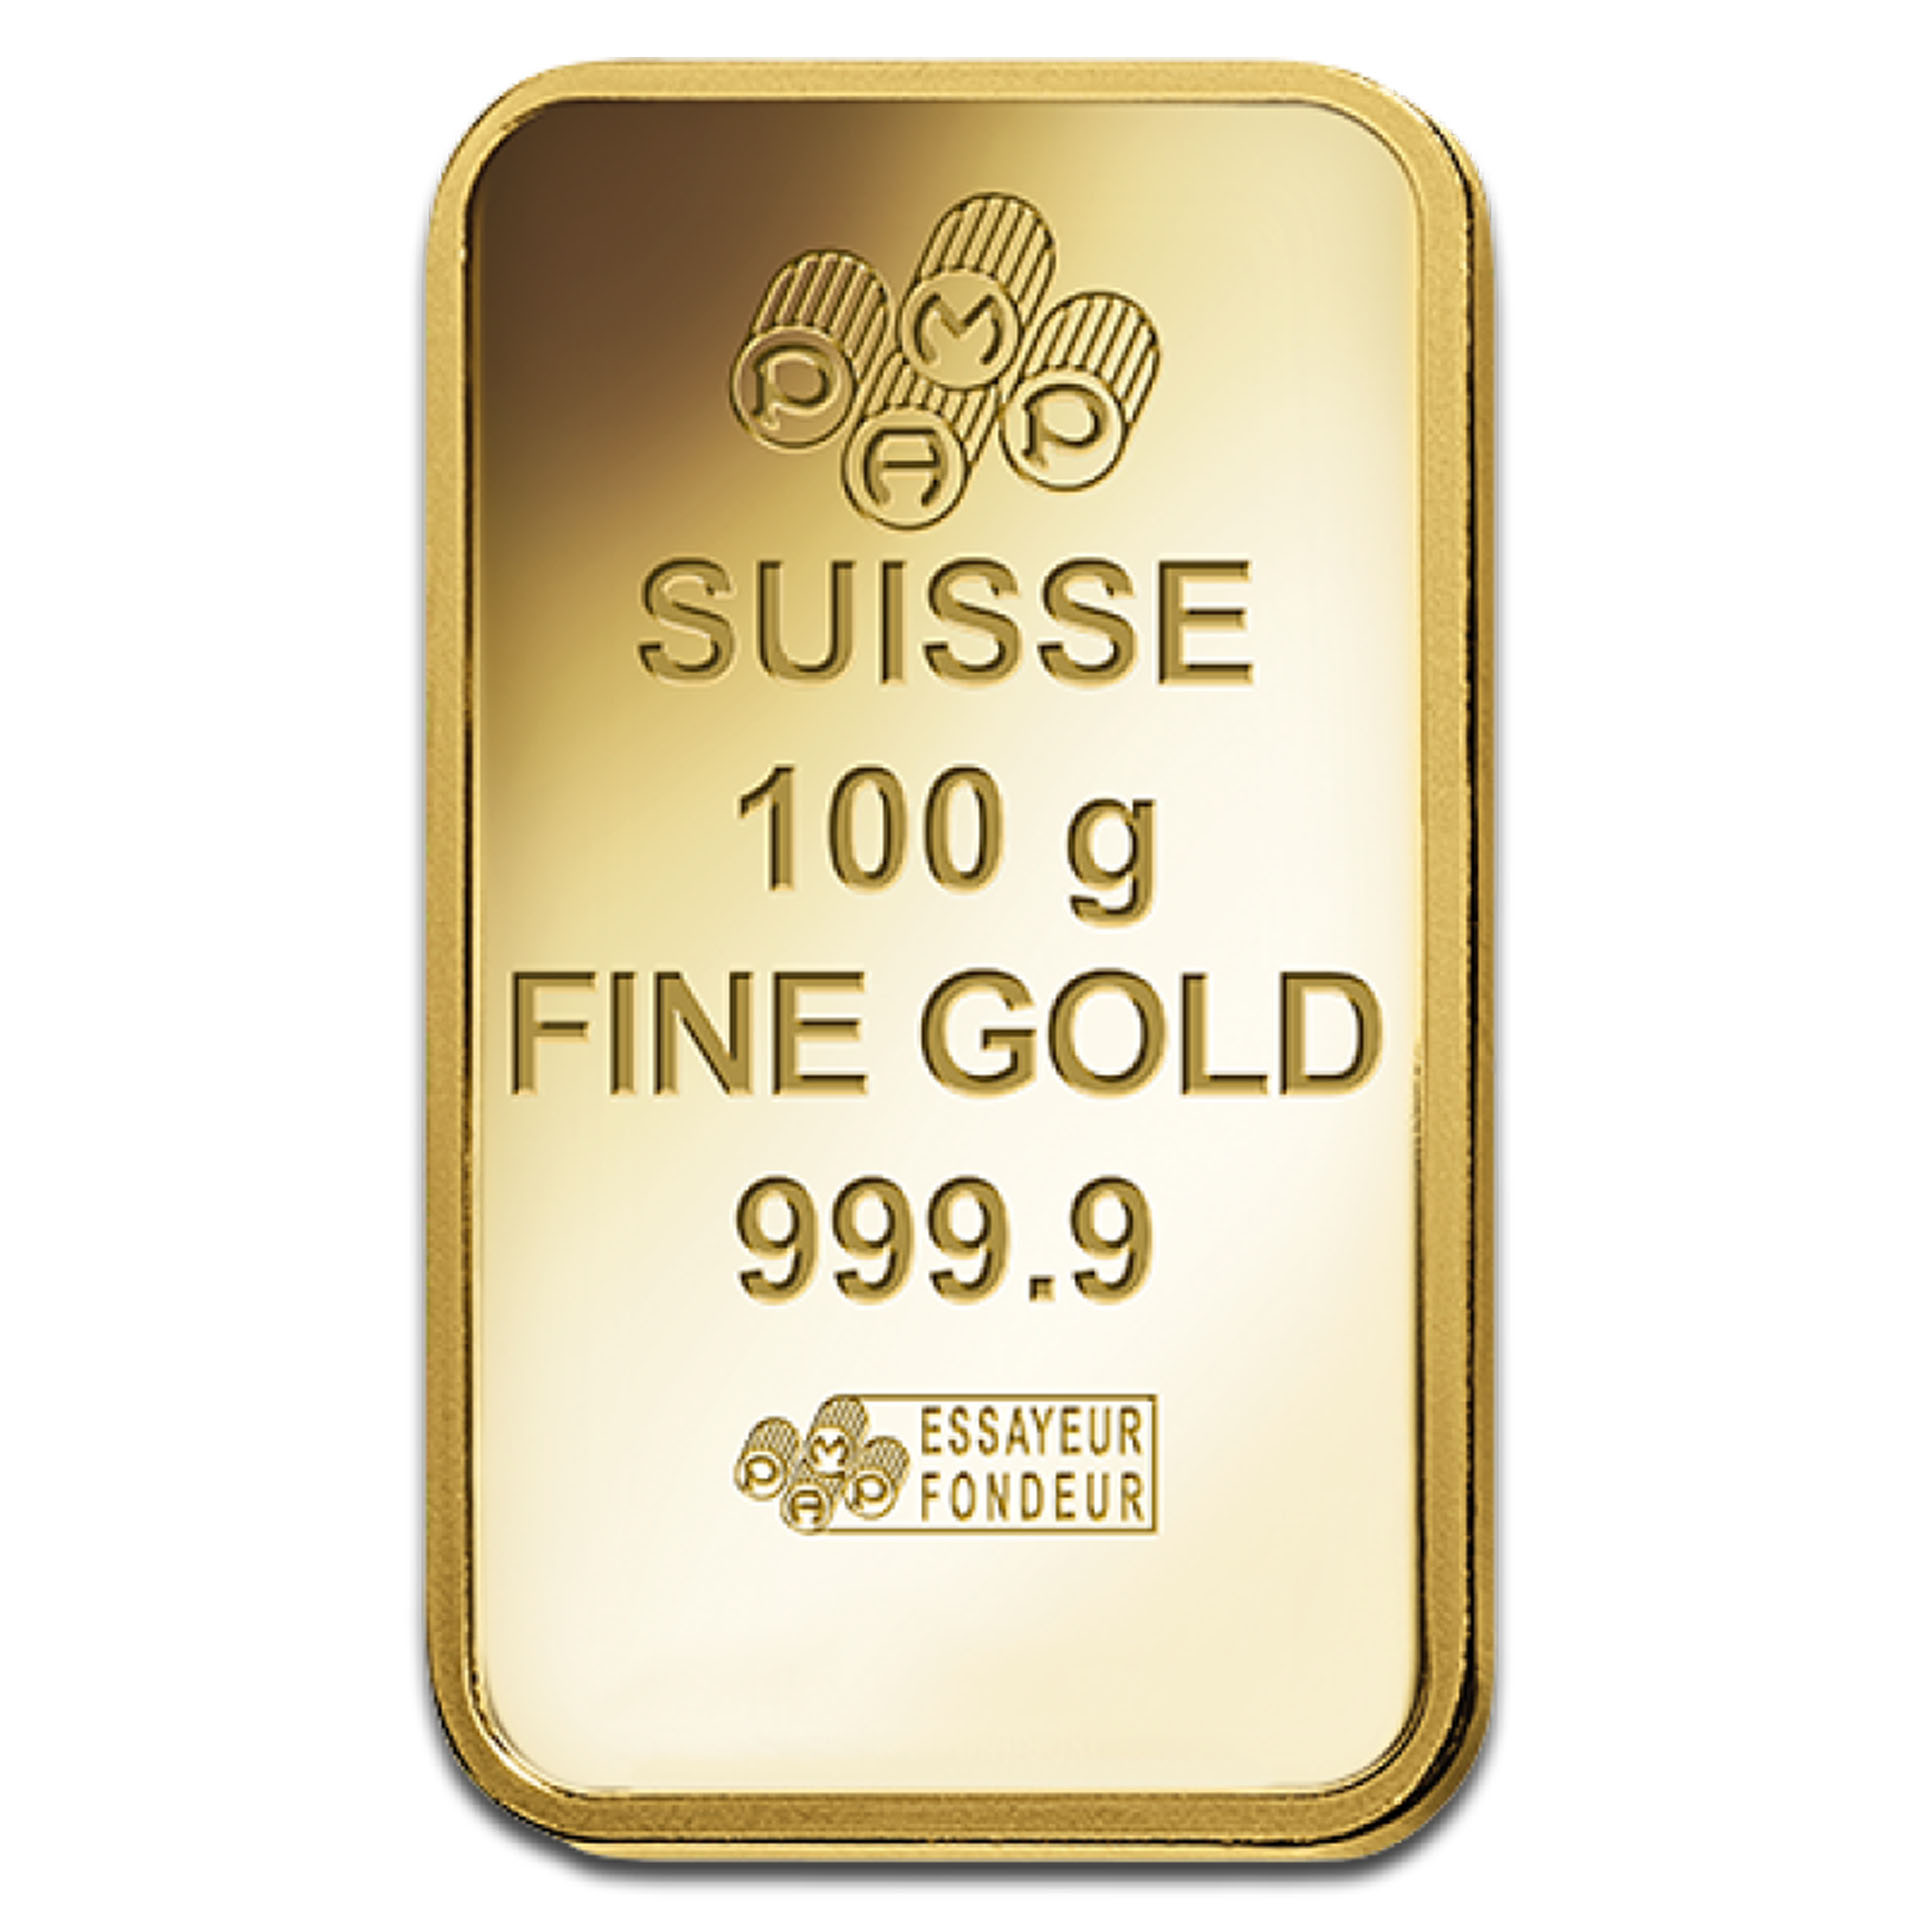 Унция золота в граммах сегодня. Suisse 10g Fine Silver 999.9 белое золото. Suisse 10g Fine Gold 999.9 кулон. Слиток золота 999. 999.9 Fine Gold кулон серебро.